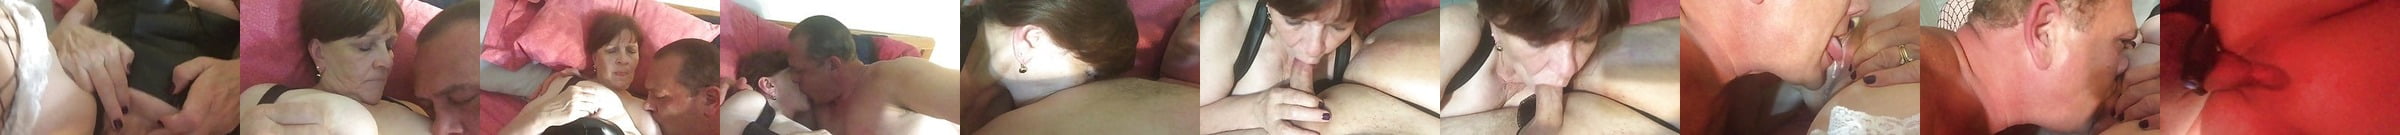 Amateur Gilf Porn Videos Xhamster